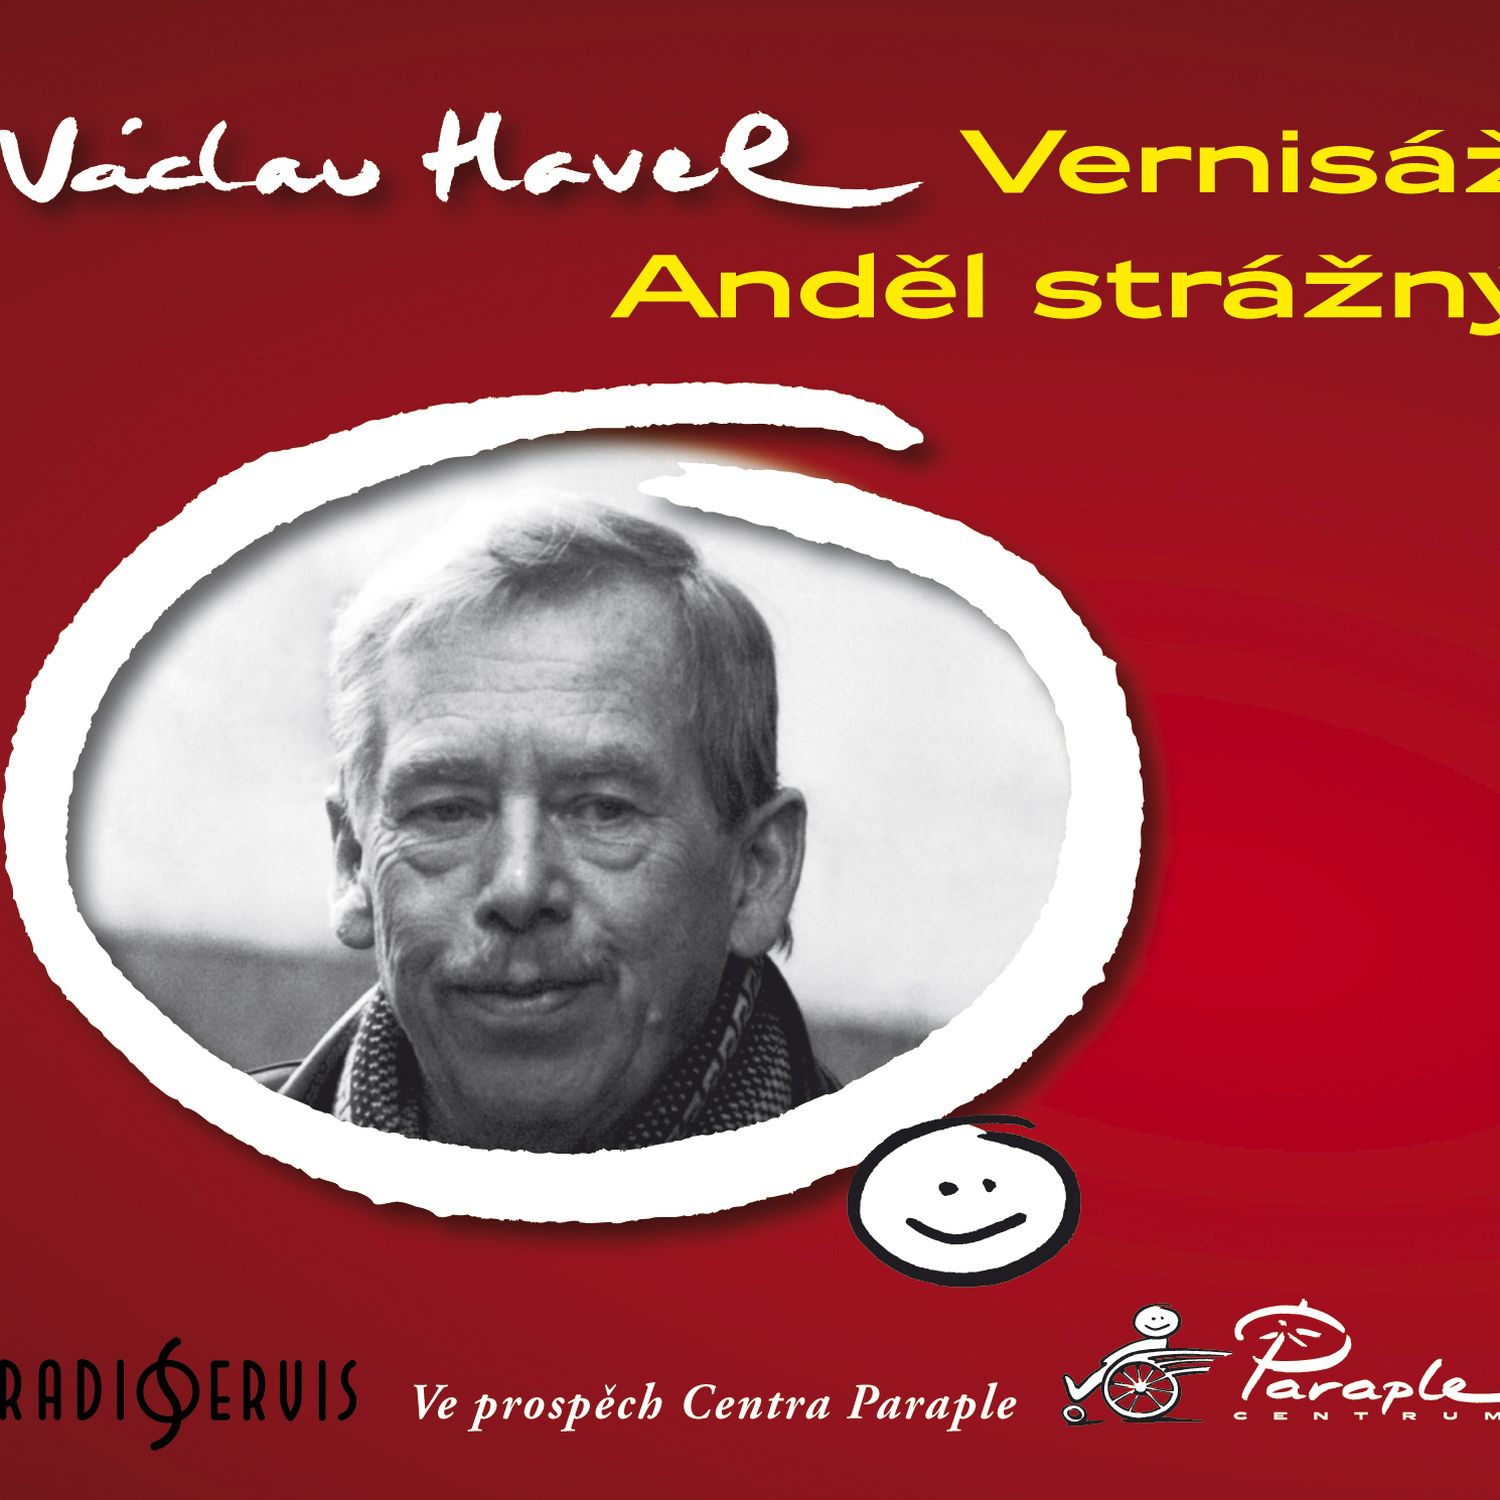 CD Shop - VARIOUS HAVEL: VERNISAZ / ANDEL STRAZNY